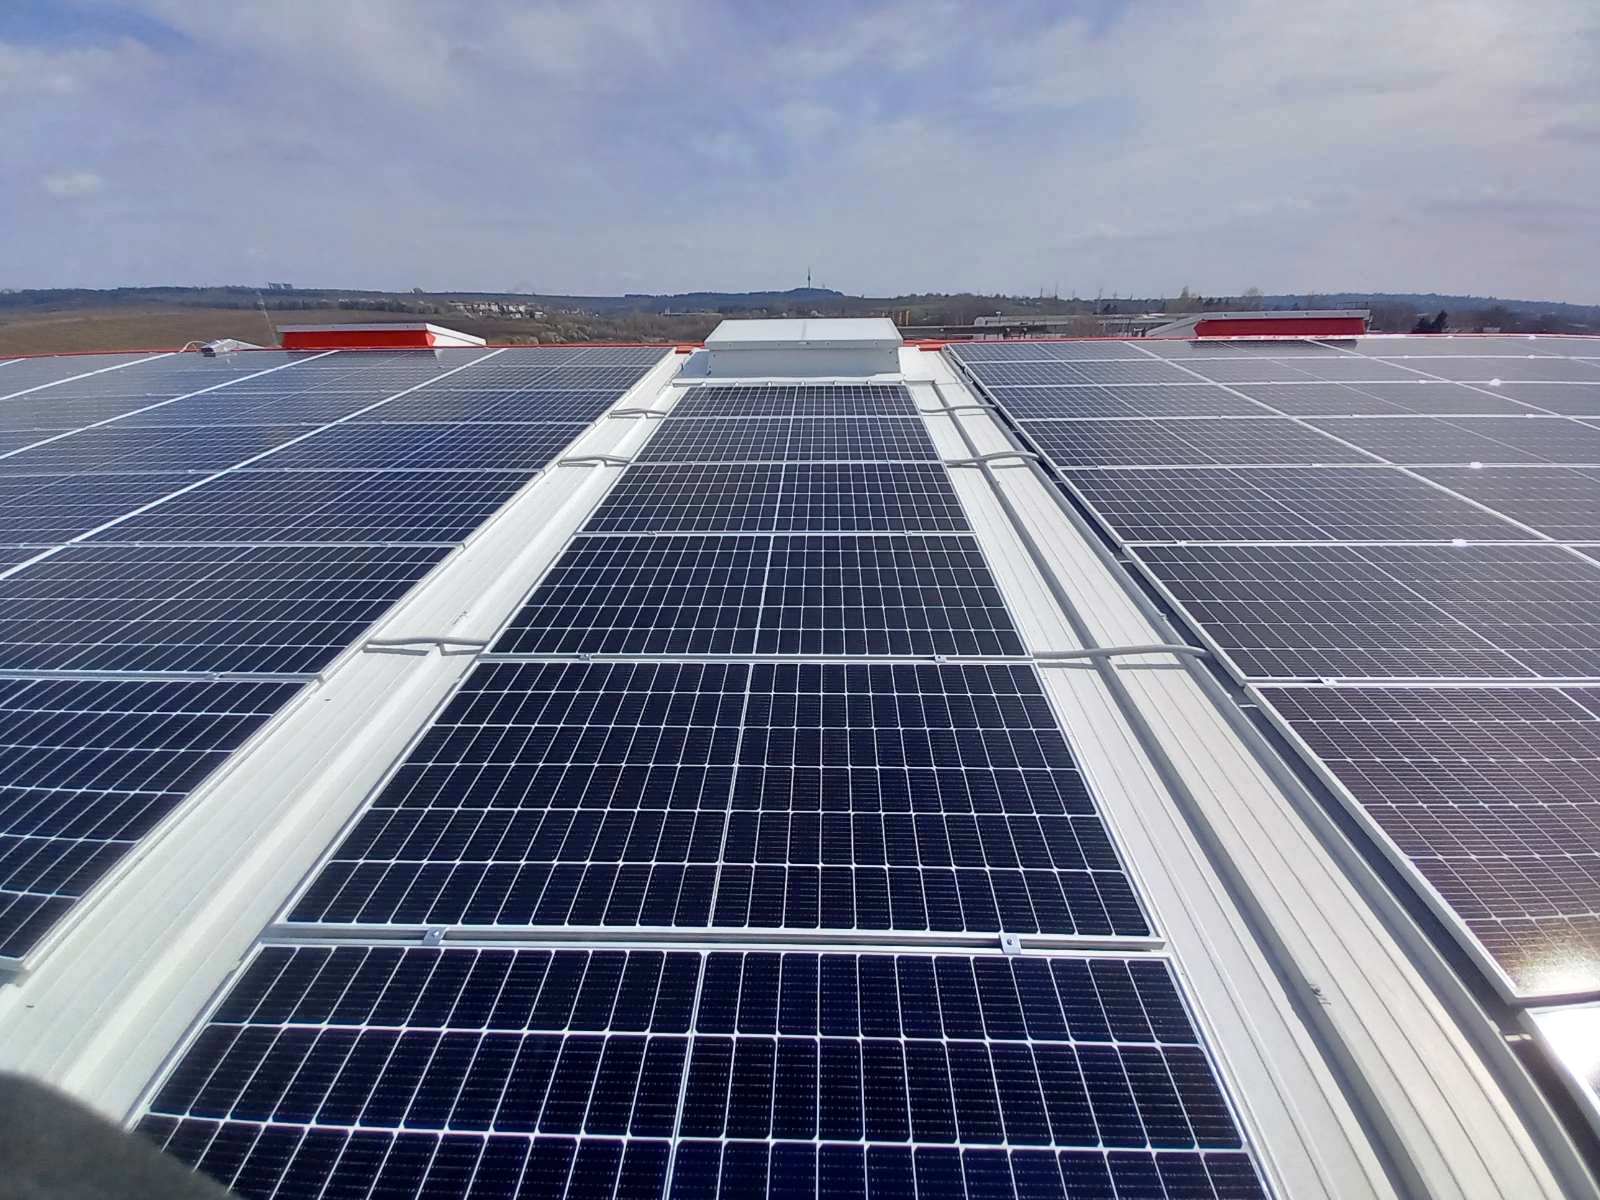 ЕНЕРГО-ПРО Енергийни услуги проектира и изгради фотоволтаична електроцентрала за своя